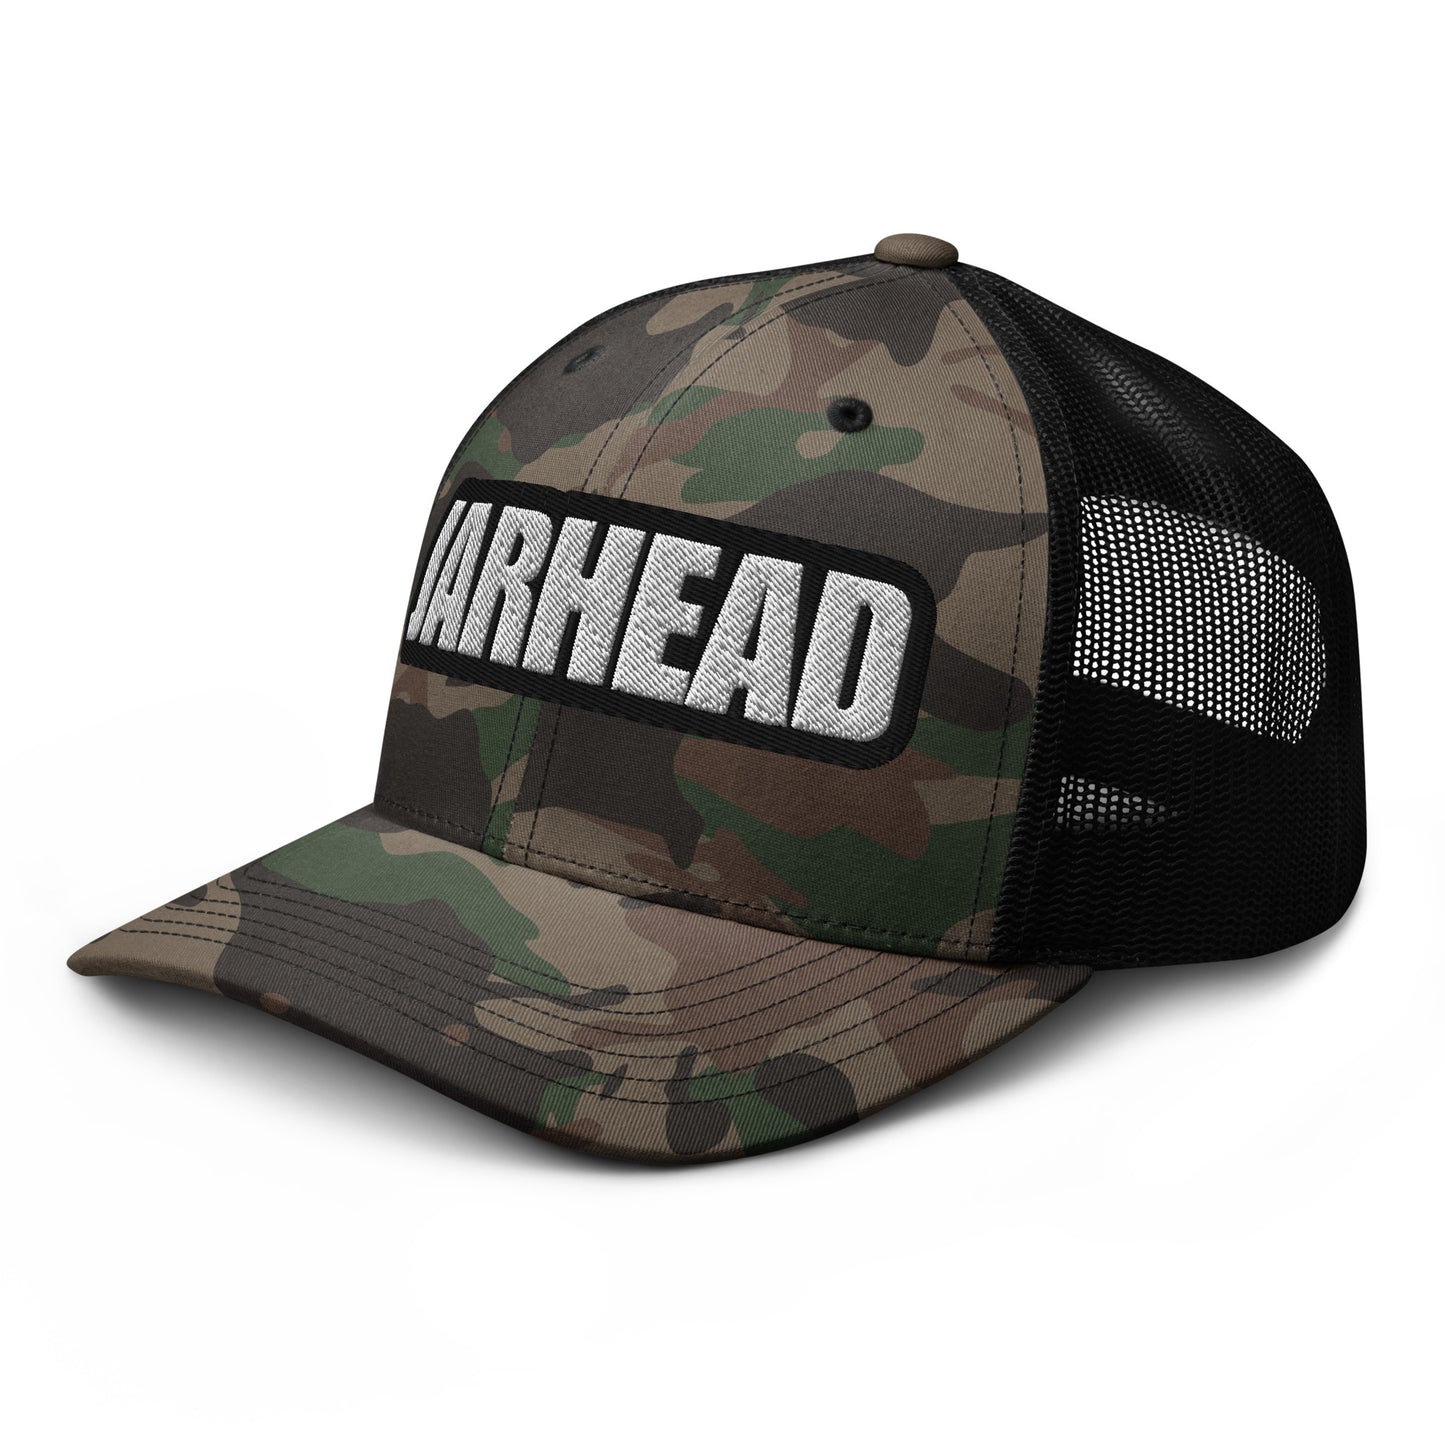 JARHEAD Camouflage trucker hat